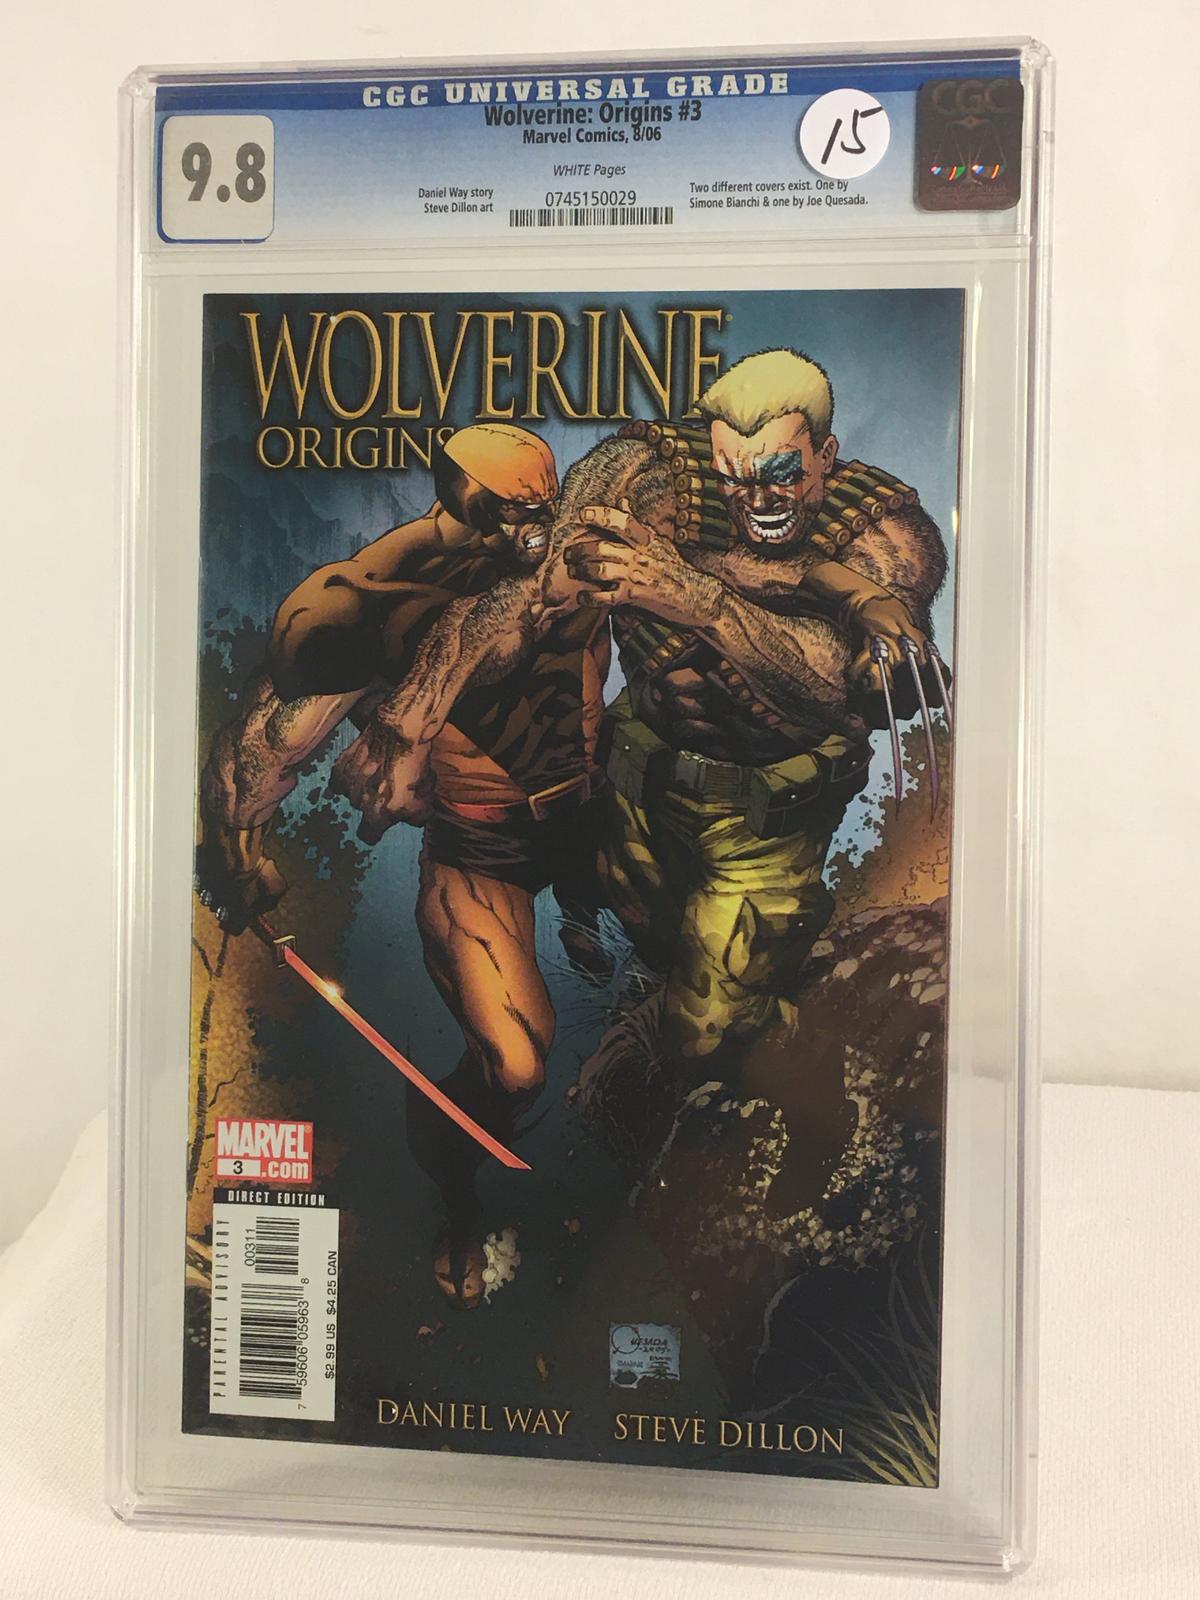 Collector CGC Universal Grade 9.8 Wolverine : origin #3 Marvel Comics 8/06